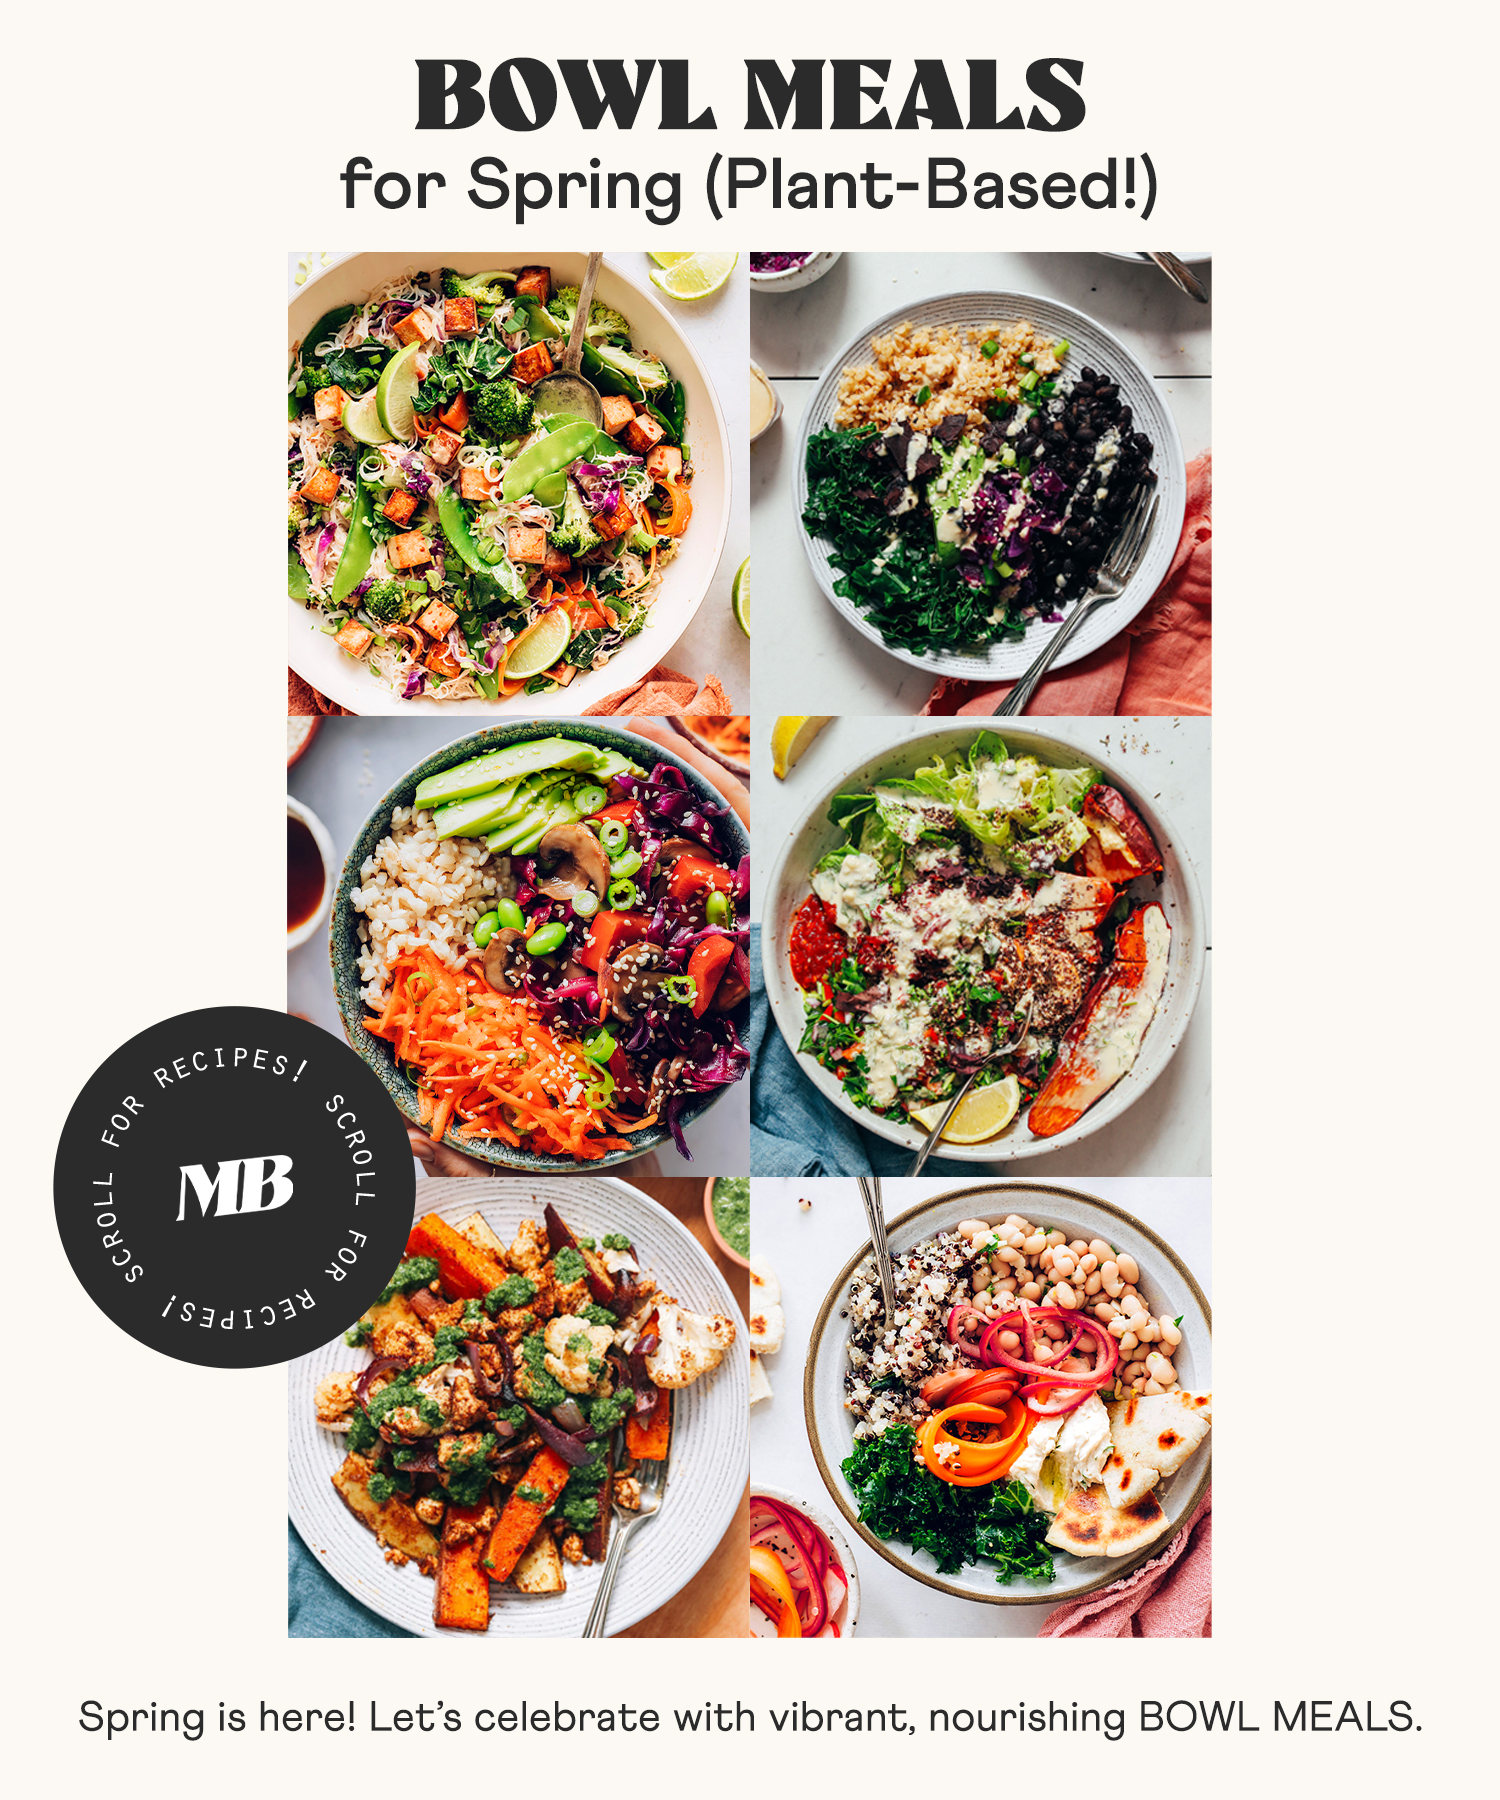 Image of plant-based bowl meals for spring